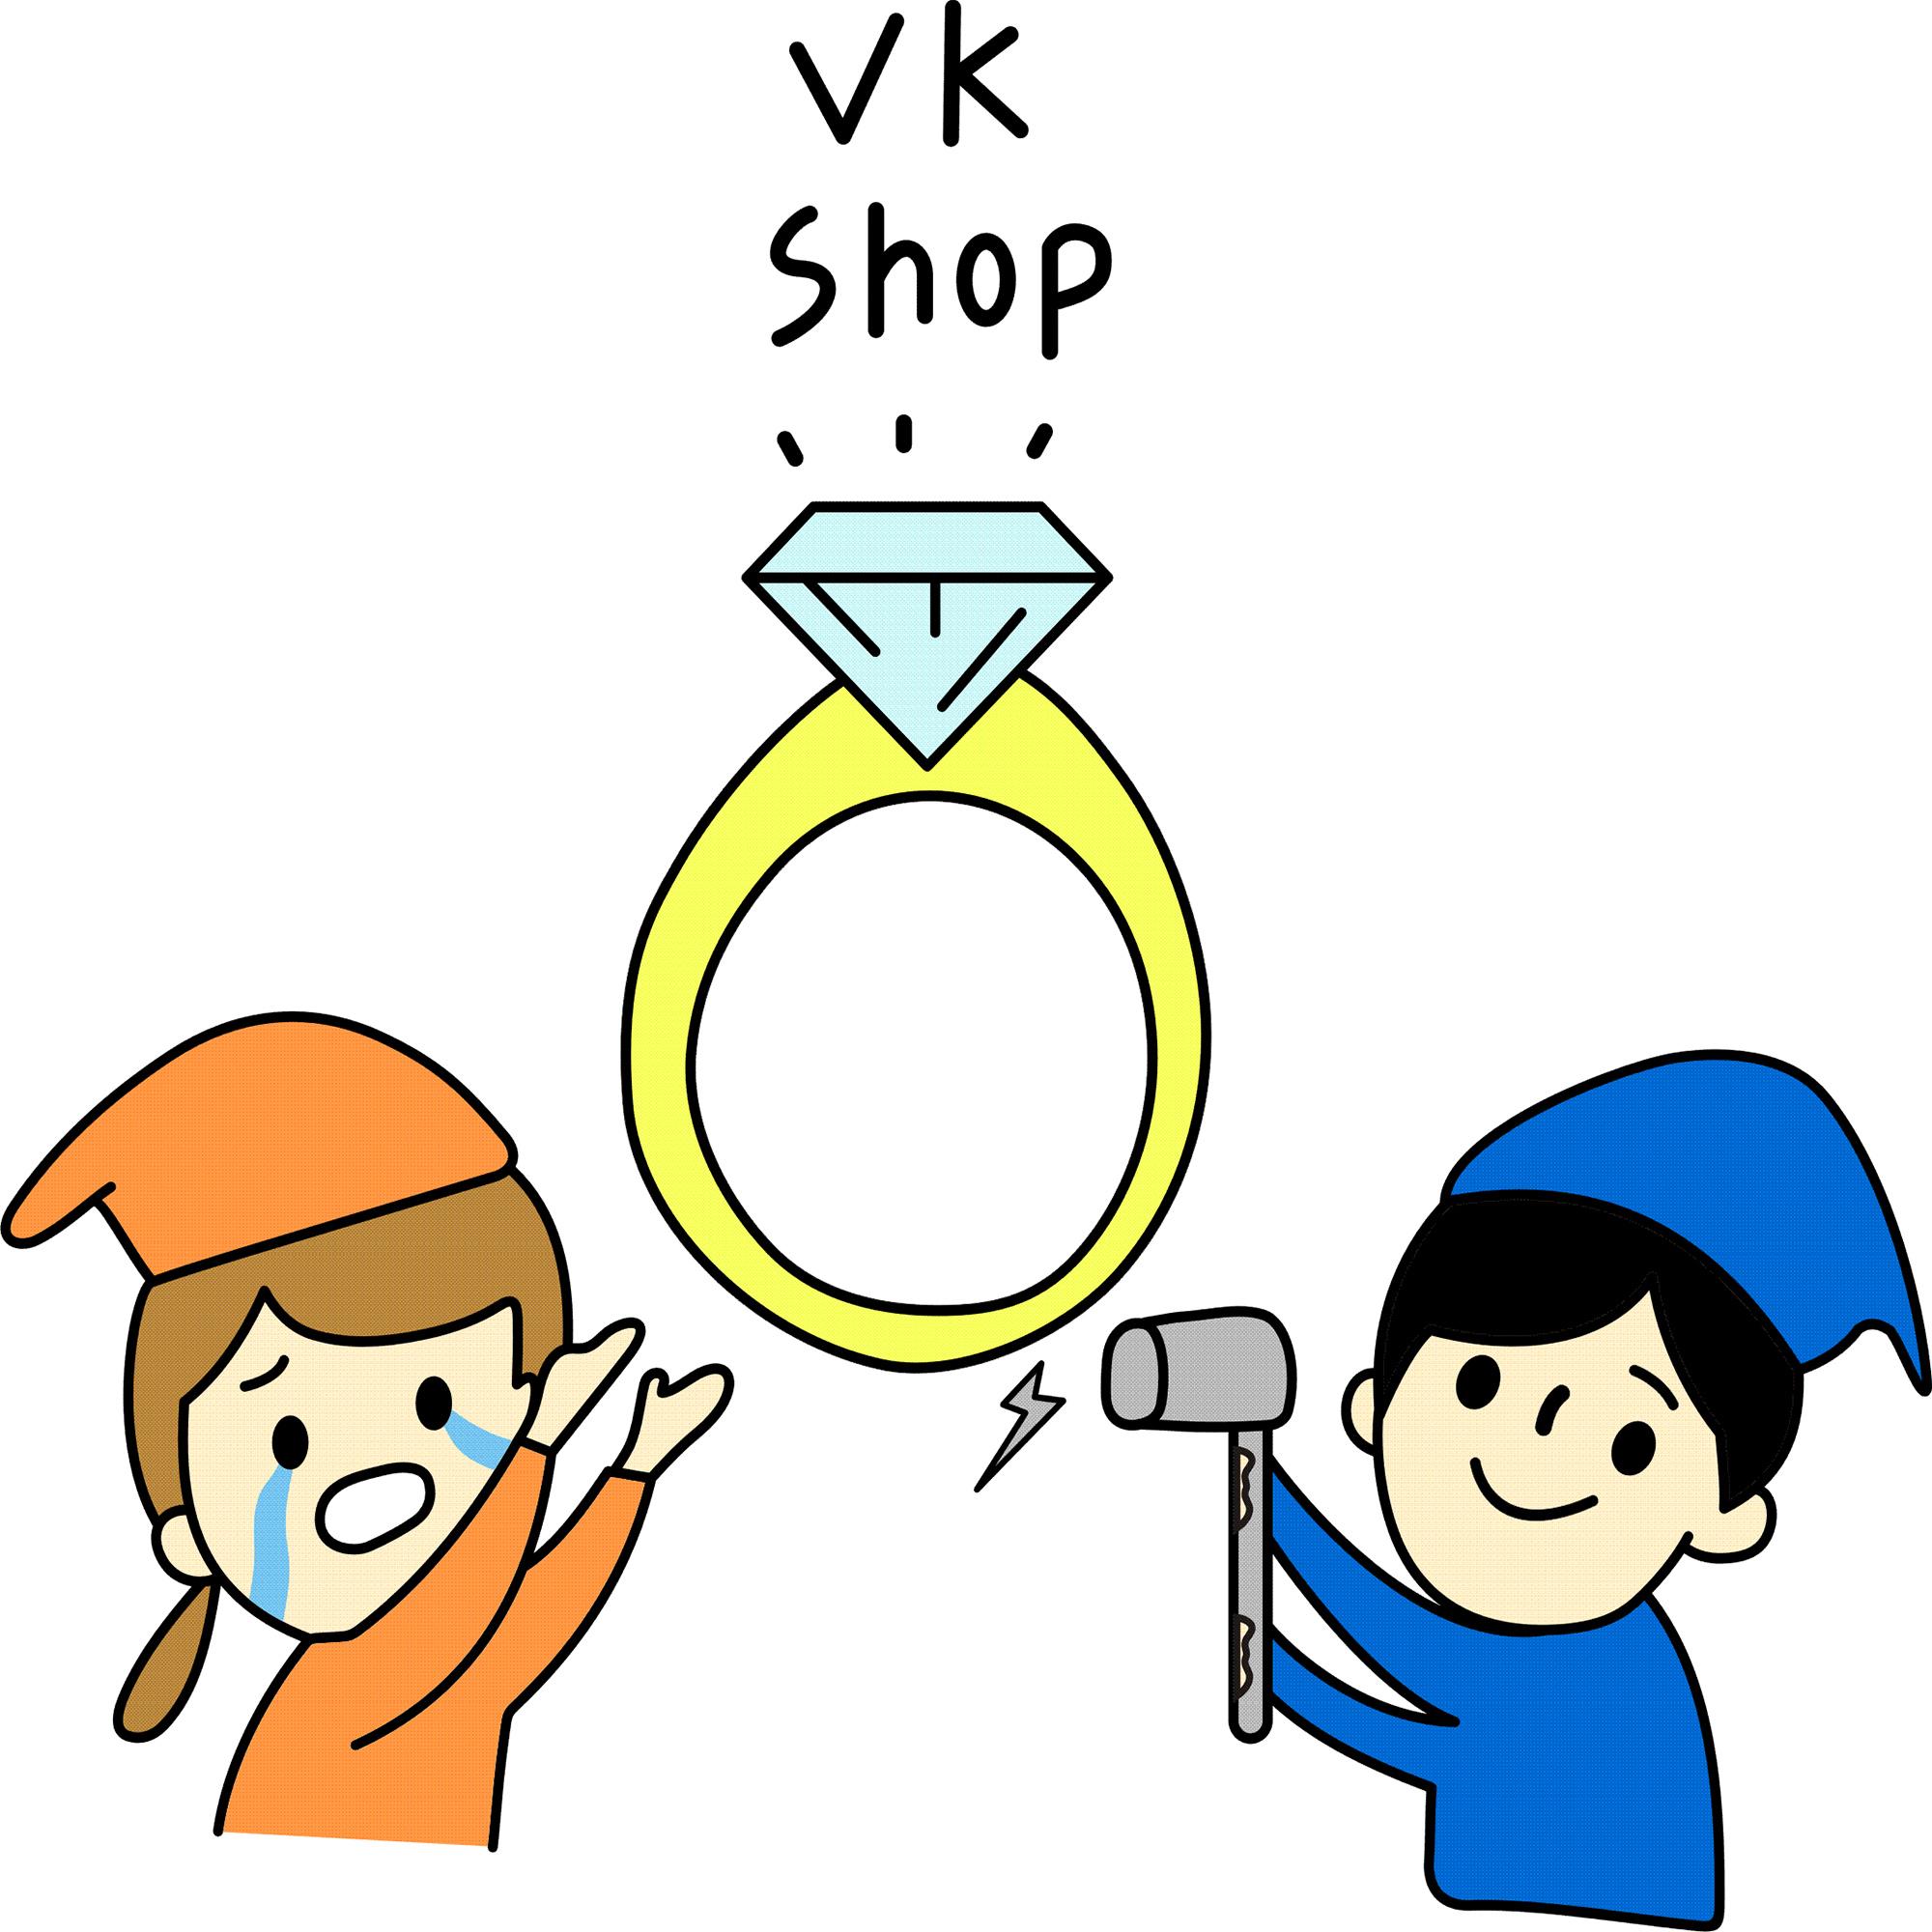 vk shop 專營韓國日本歐美各類銀飾